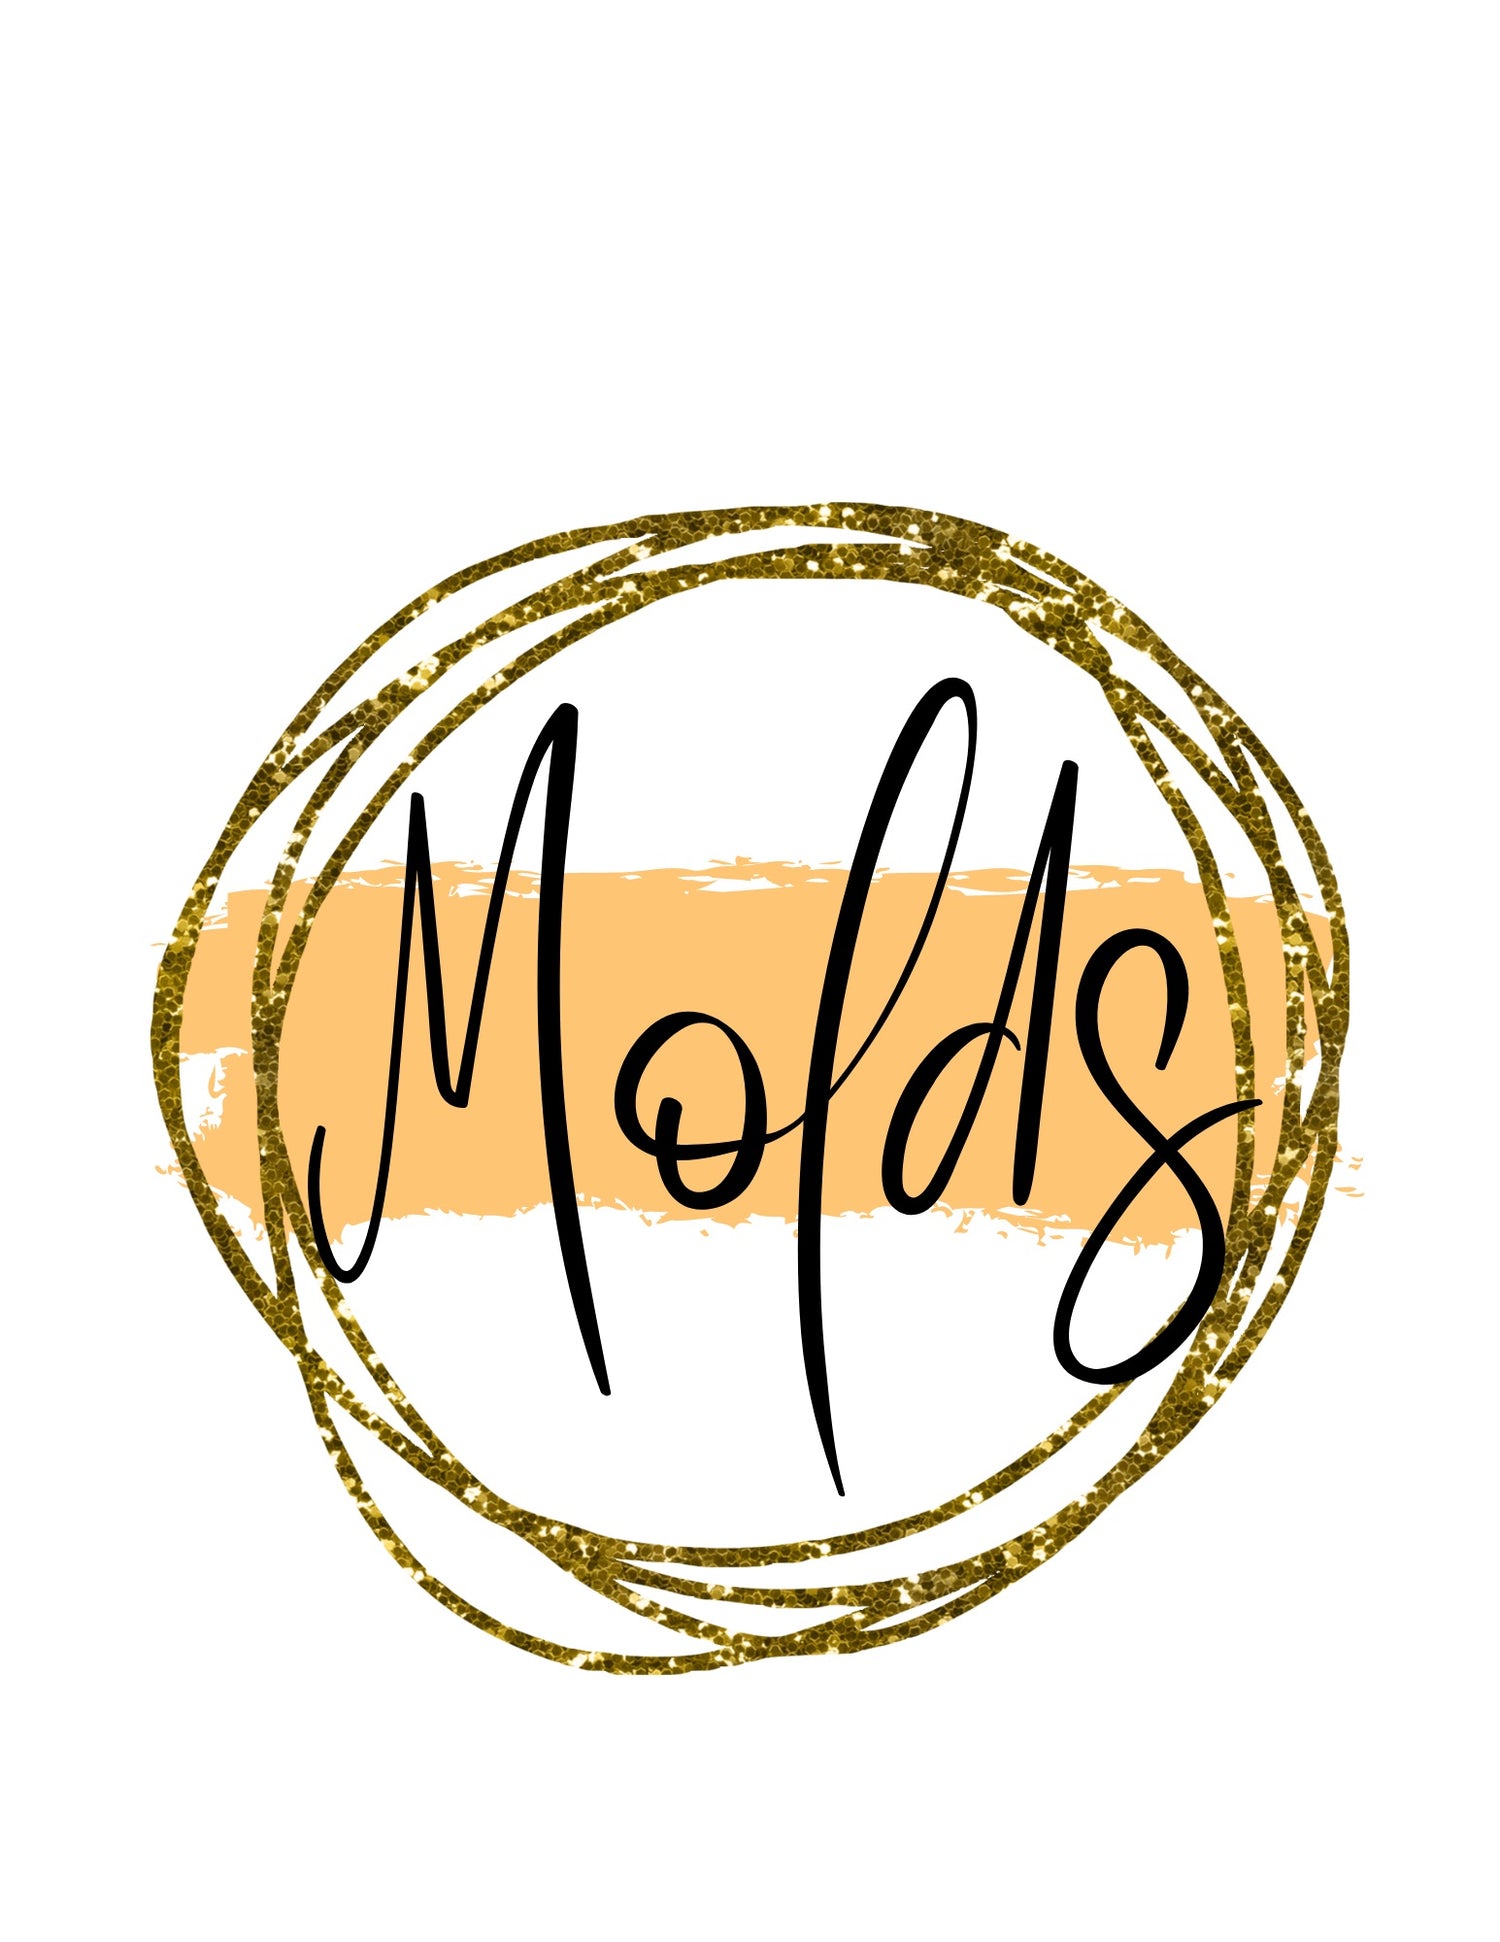 Molds